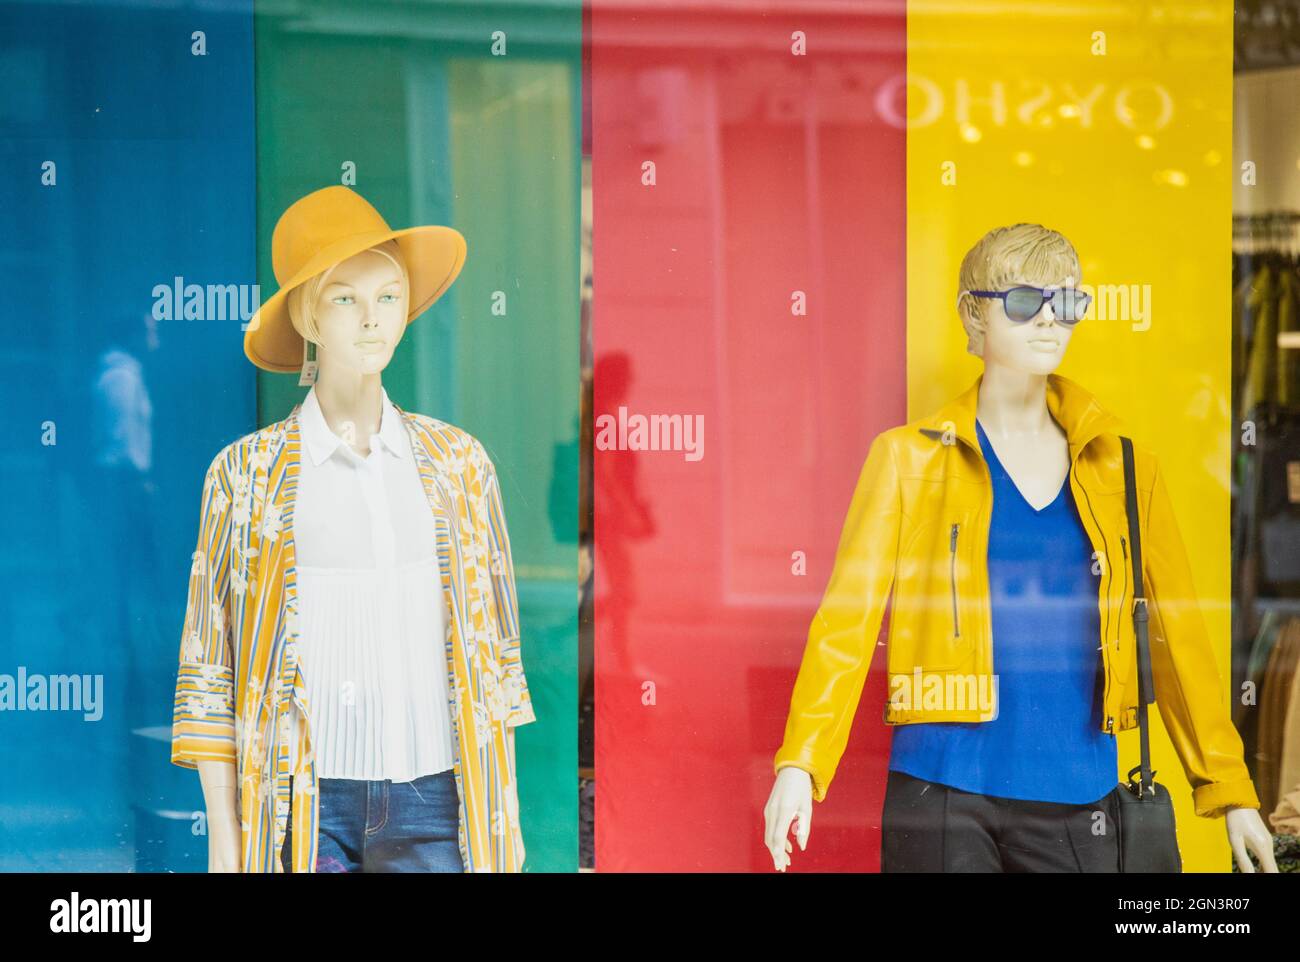 Benetton-Geschäft in Spanien Stockfotografie - Alamy